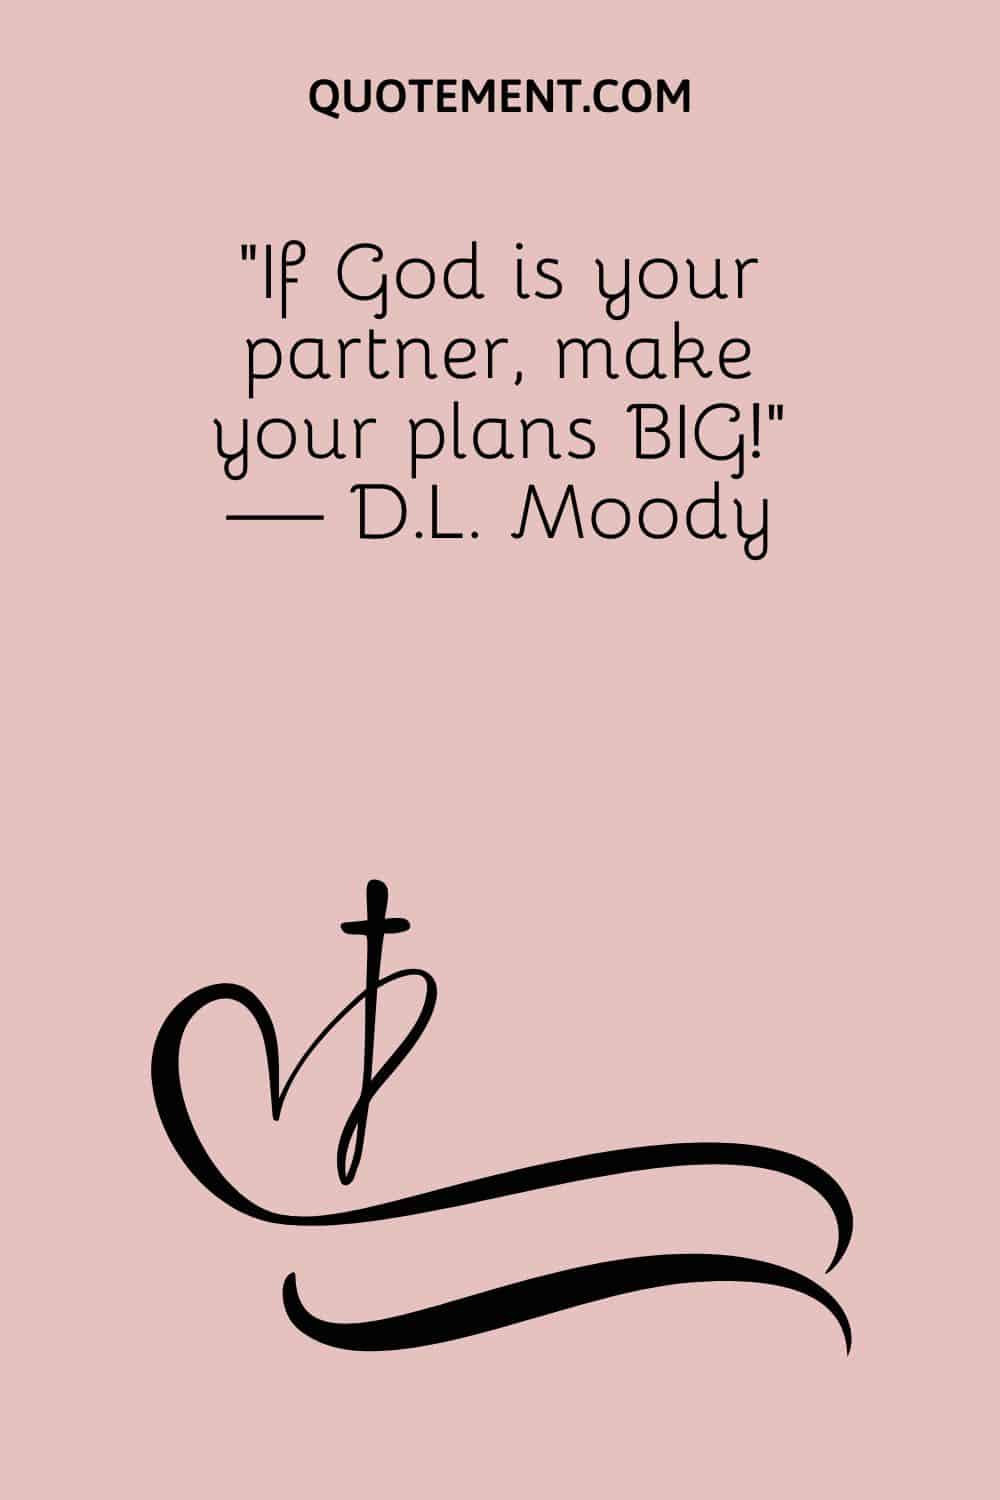 If God is your partner, make your plans BIG